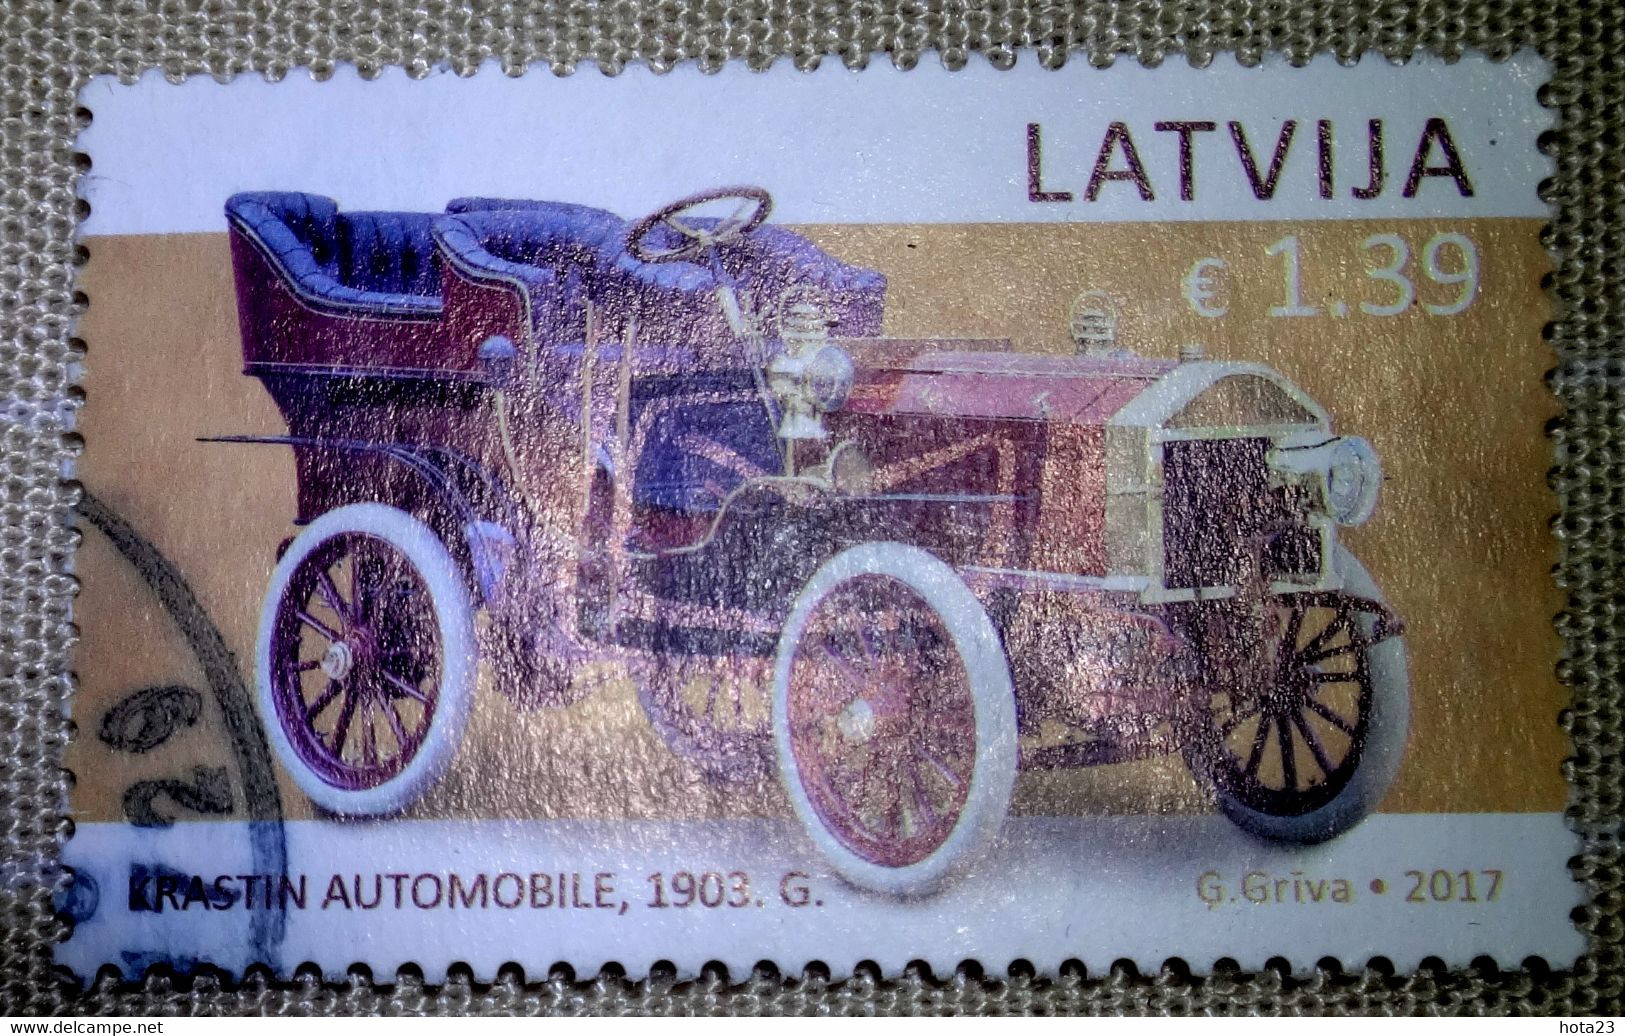 LATVIA / LETTLAND 2017 Old Car History Automobile 1903  Used (0) - Letonia